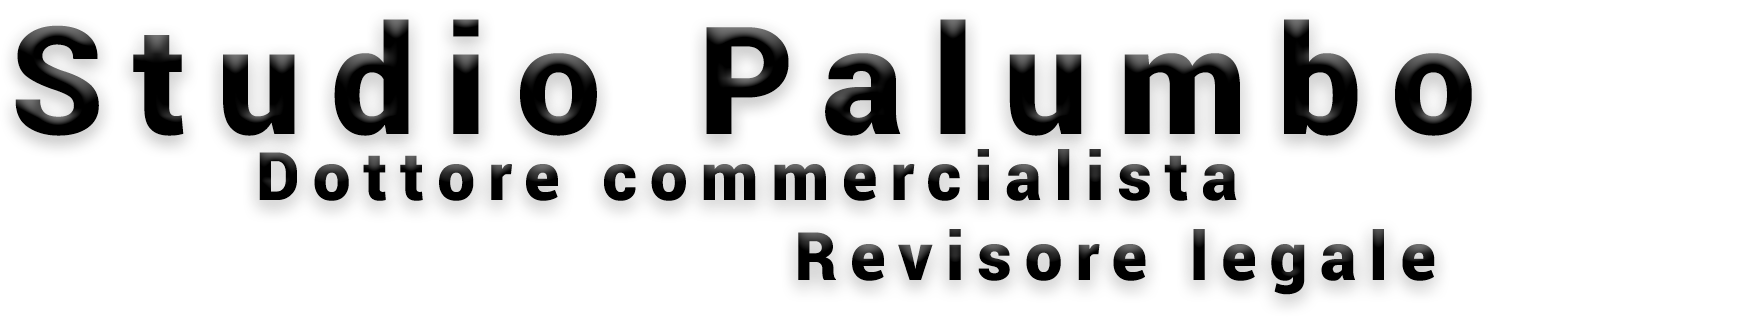 Studio Palumbo - Dottore commercialista - Revisore legale